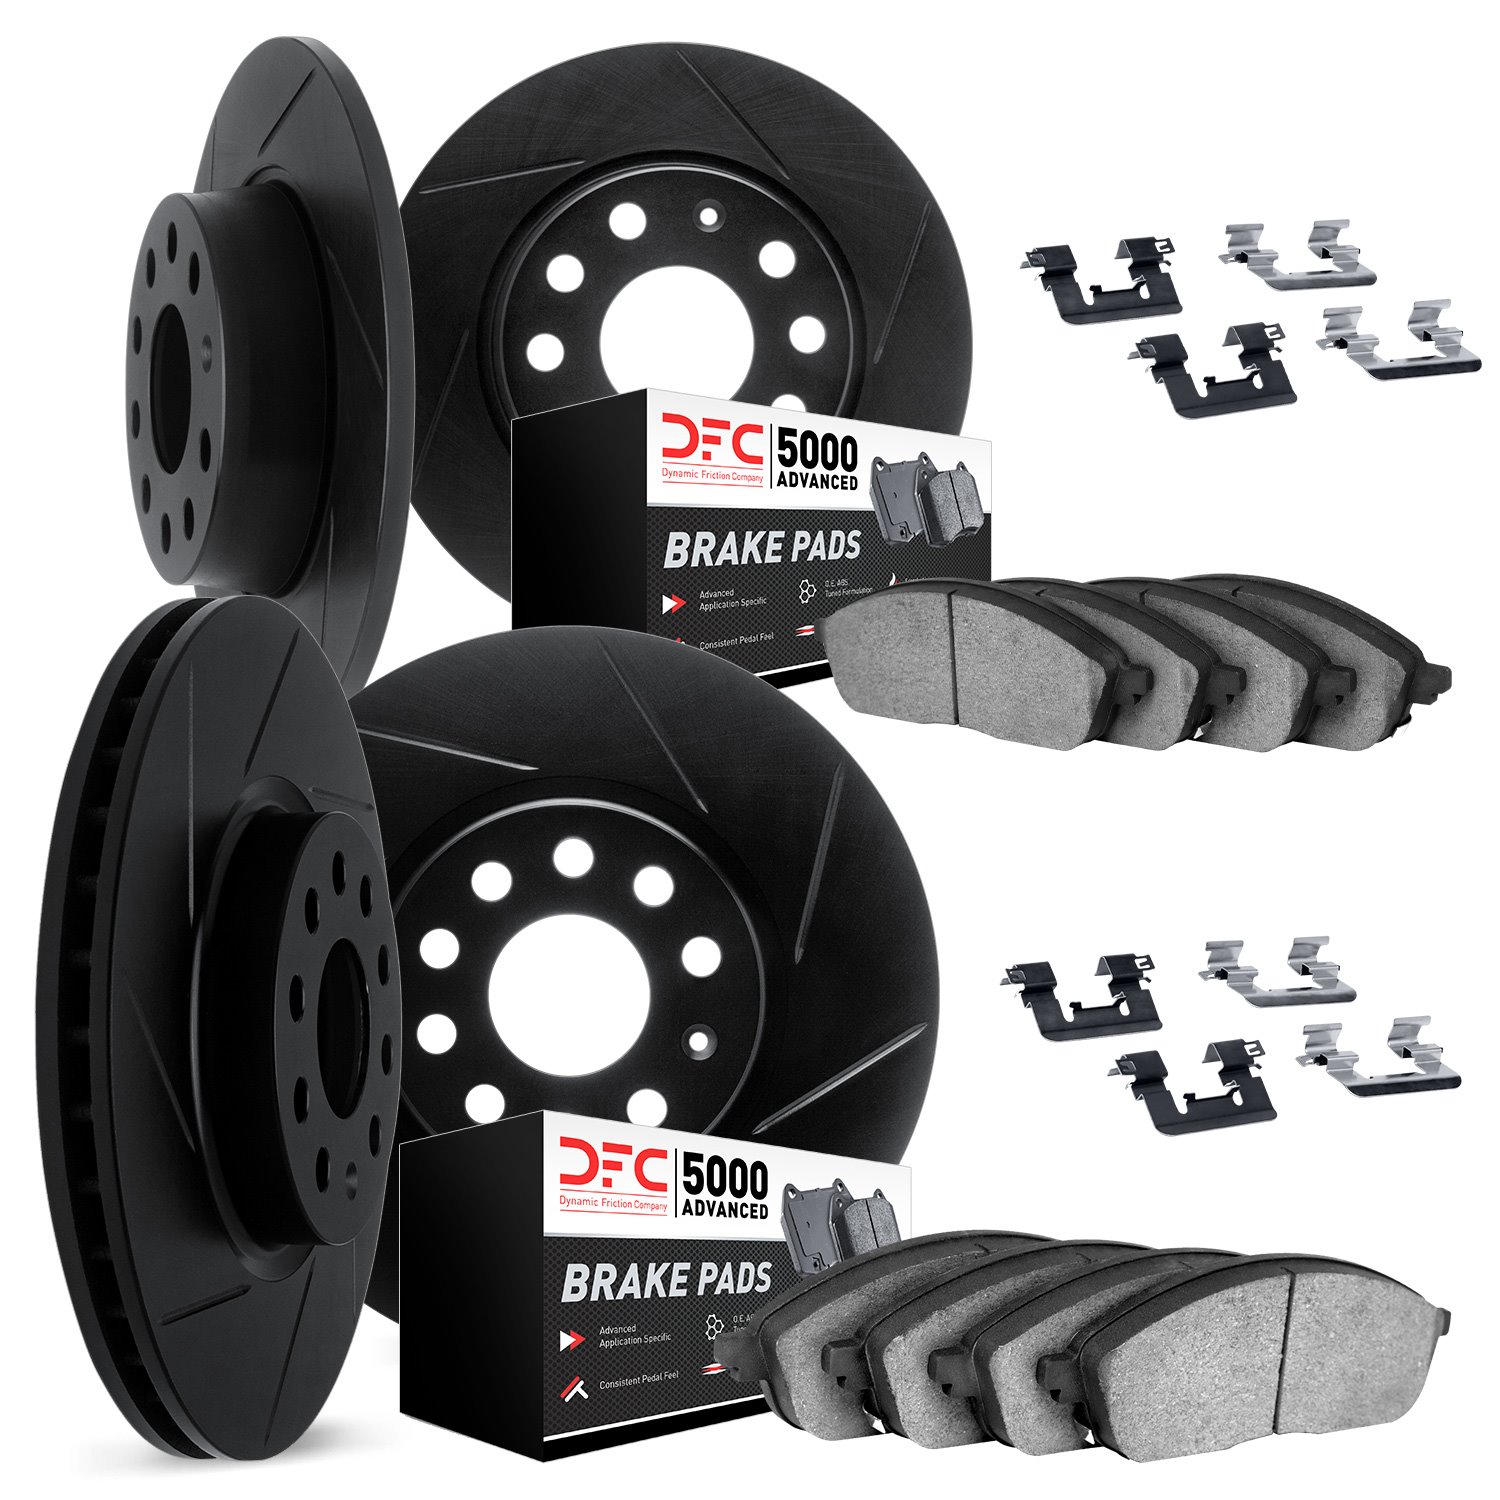 3514-39014 Slotted Brake Rotors w/5000 Advanced Brake Pads Kit & Hardware [Black], Fits Select Mitsubishi, Position: Front and R